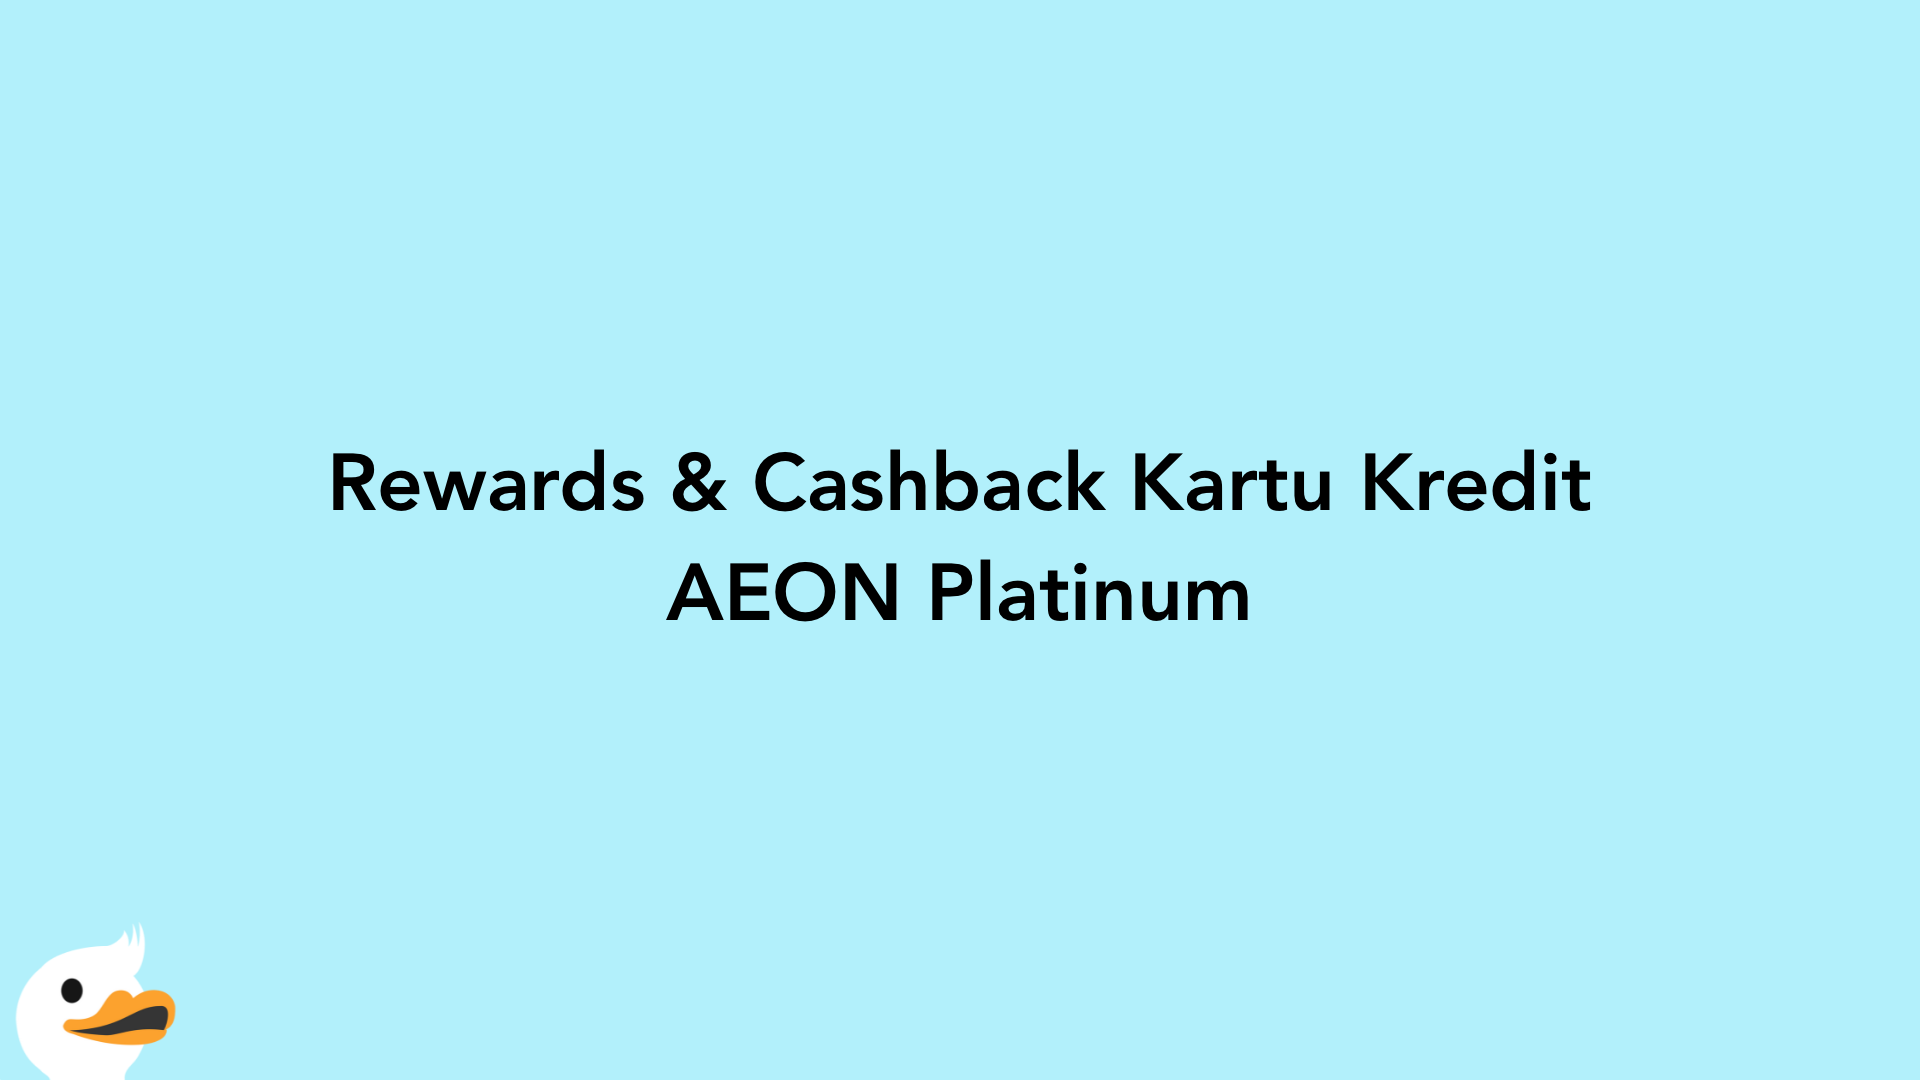 Rewards & Cashback Kartu Kredit AEON Platinum